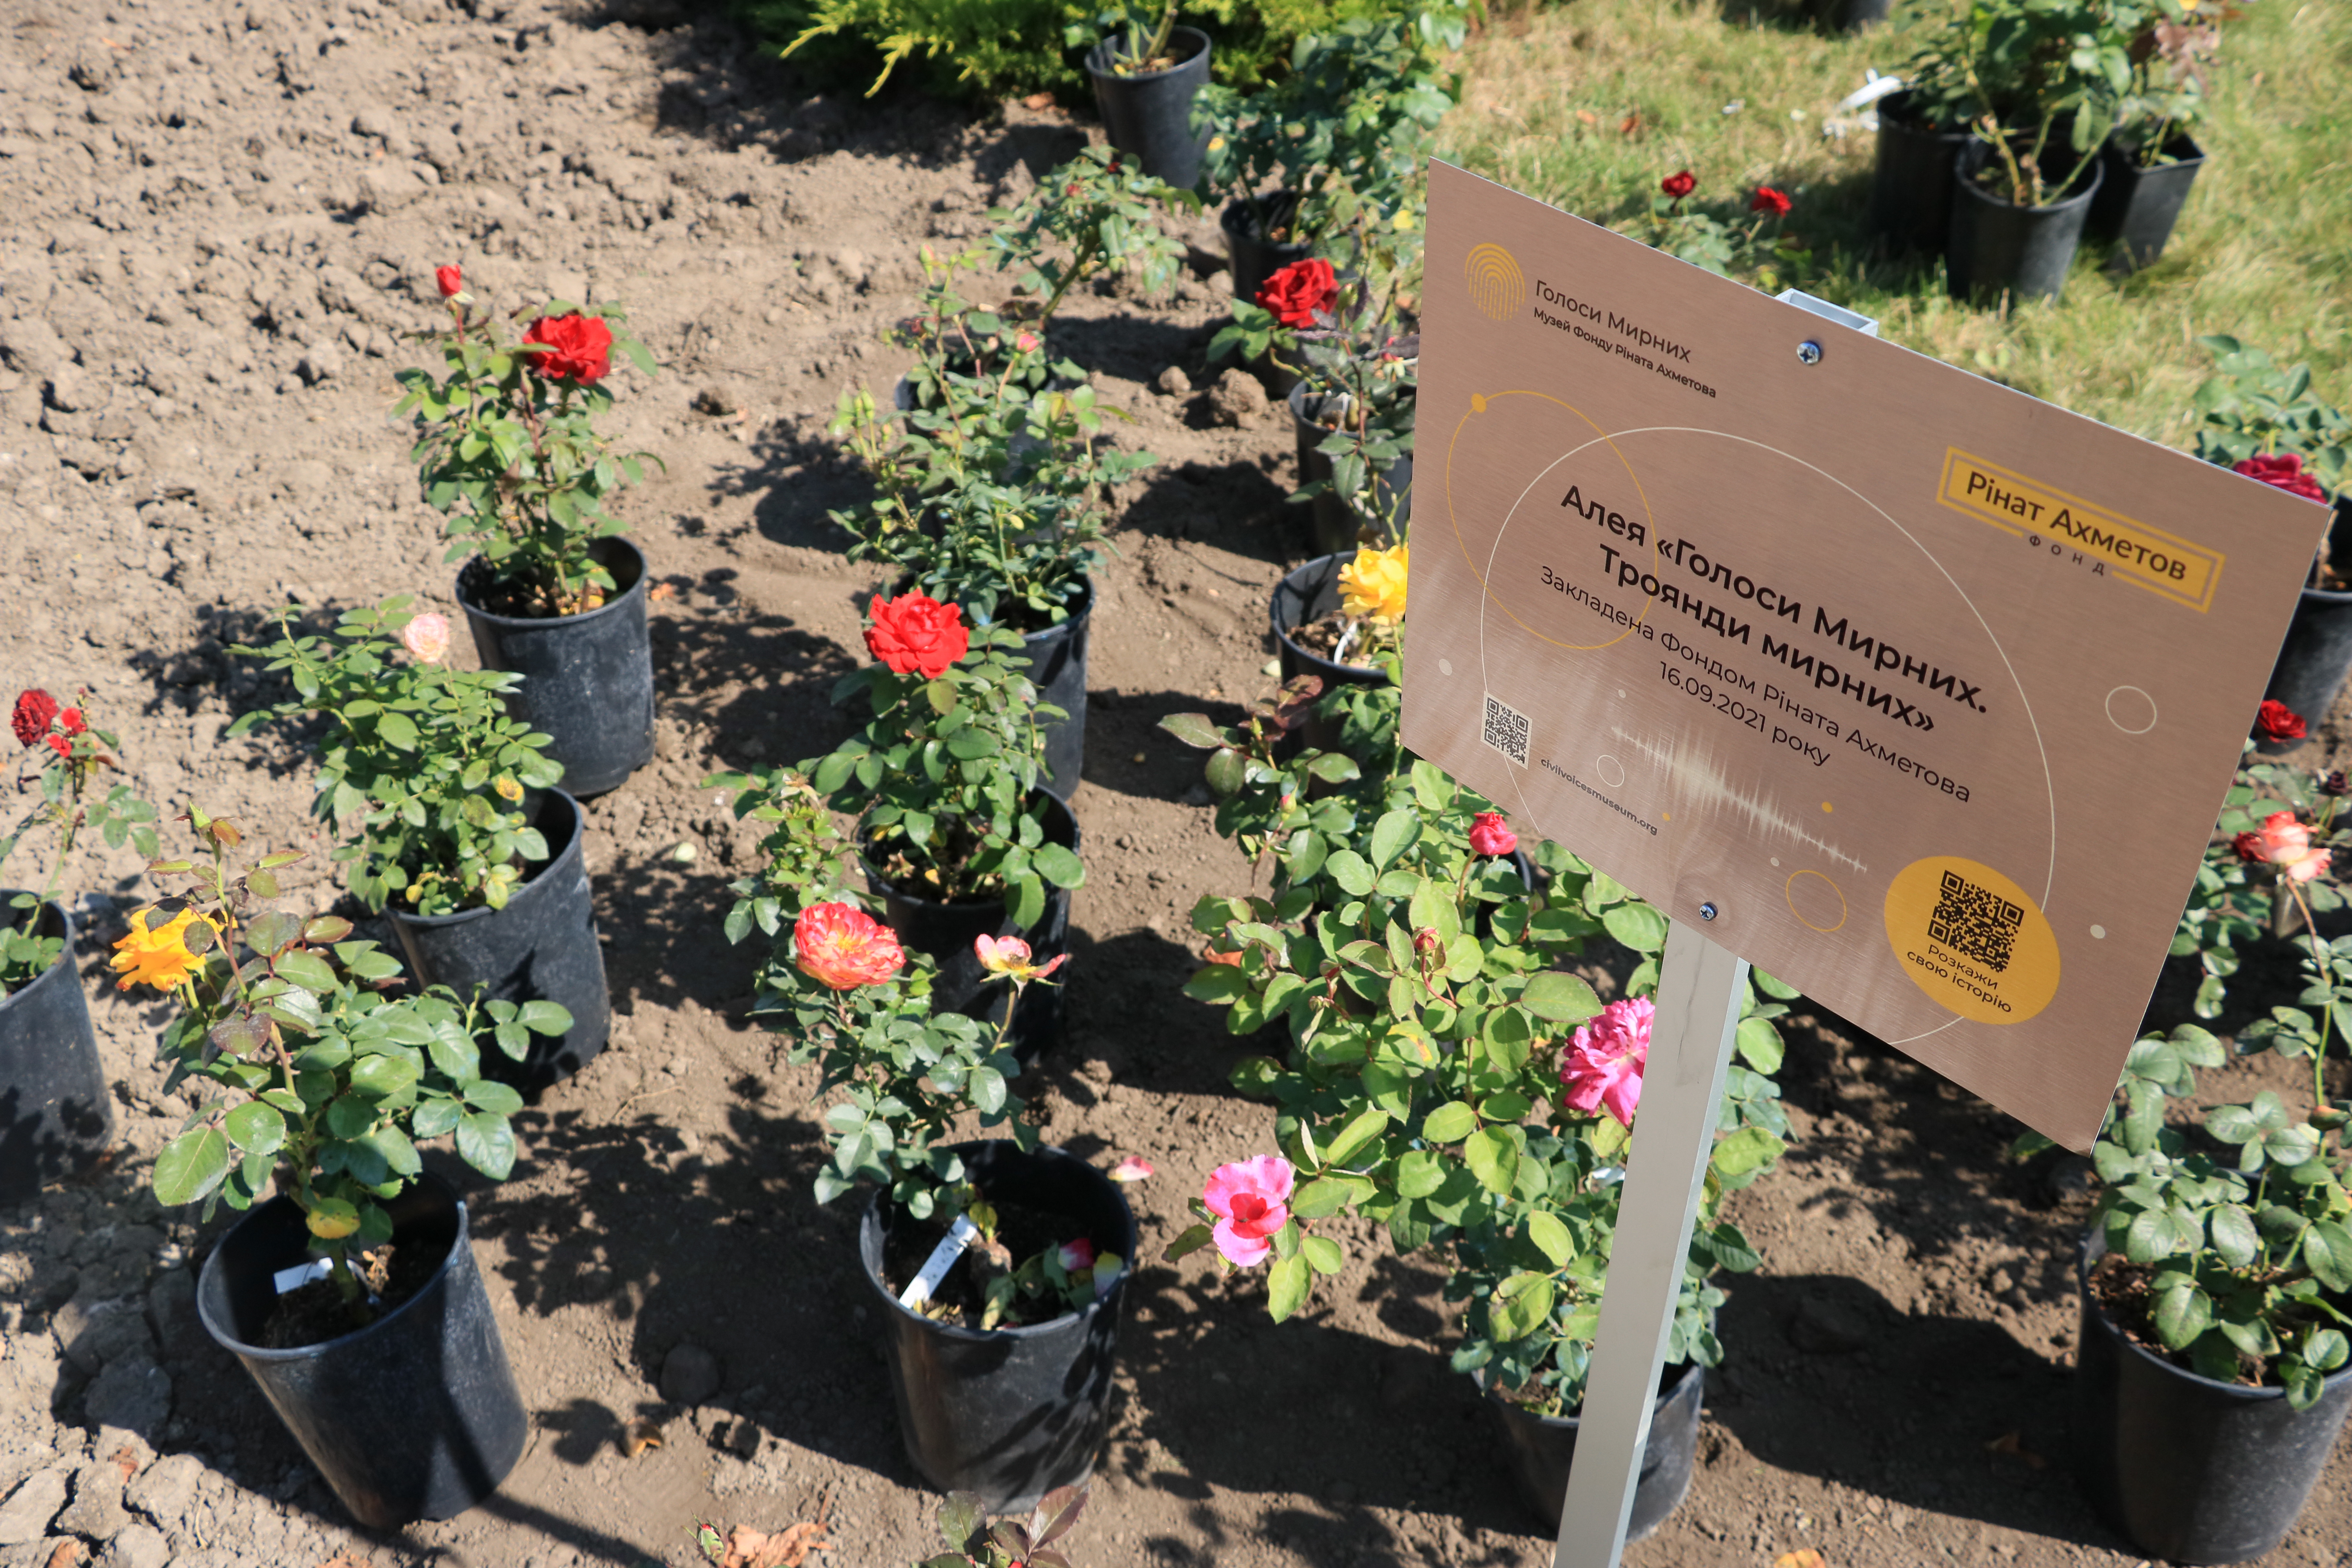 On 16 September 2021, the Rinat Akhmetov Foundation laid out a Roses Alley of 700 rose seedlings in Vinnytsia